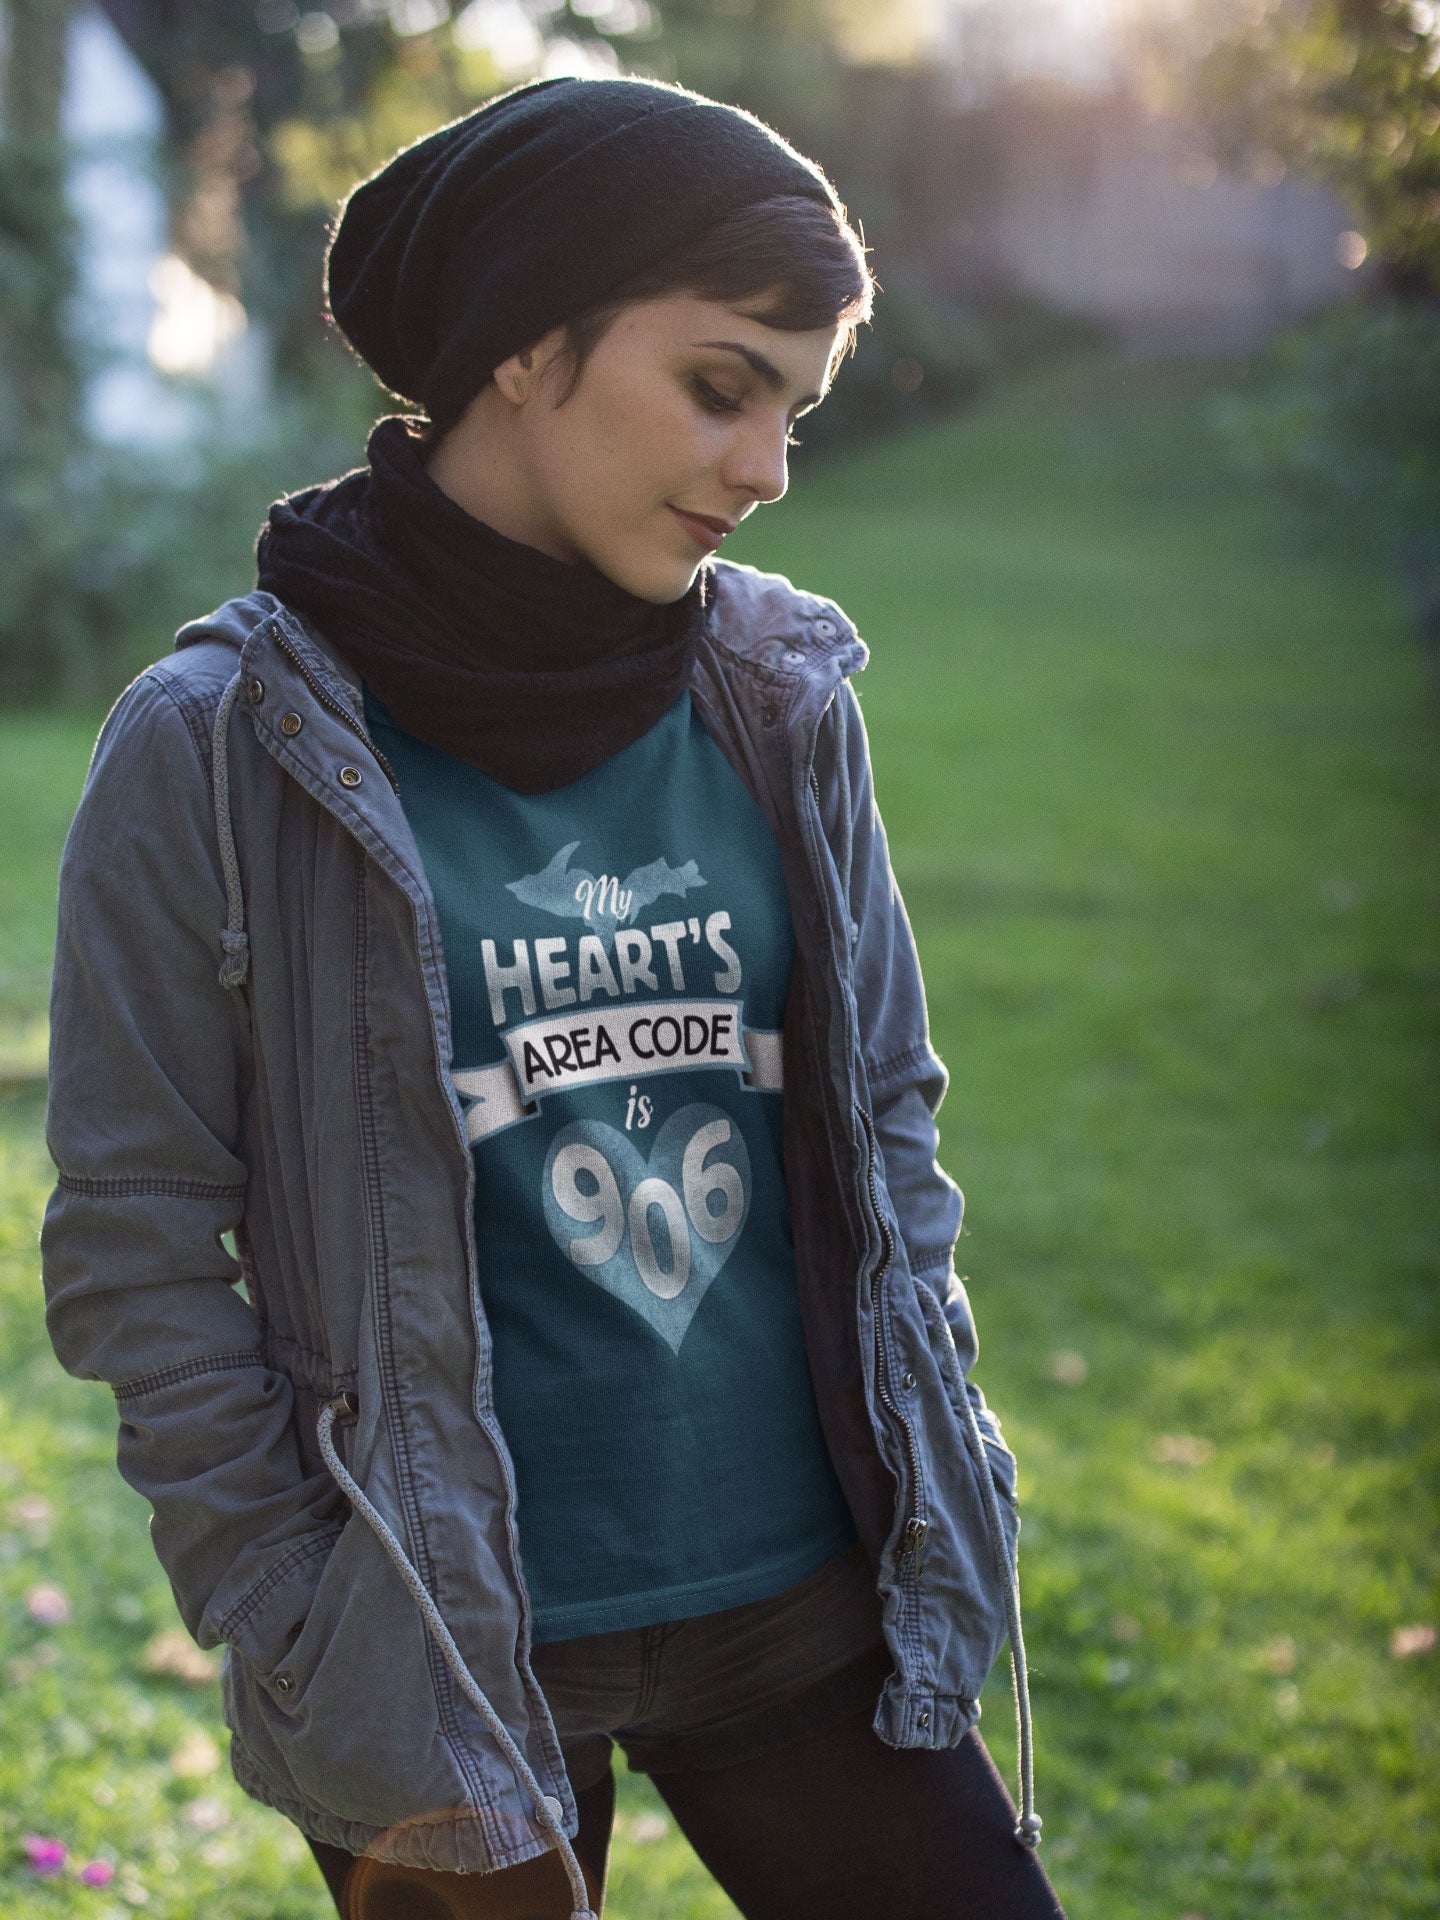 My Heart's Area Code is 906 Shirt | Yooper Gift | Upper Michigan T-shirt